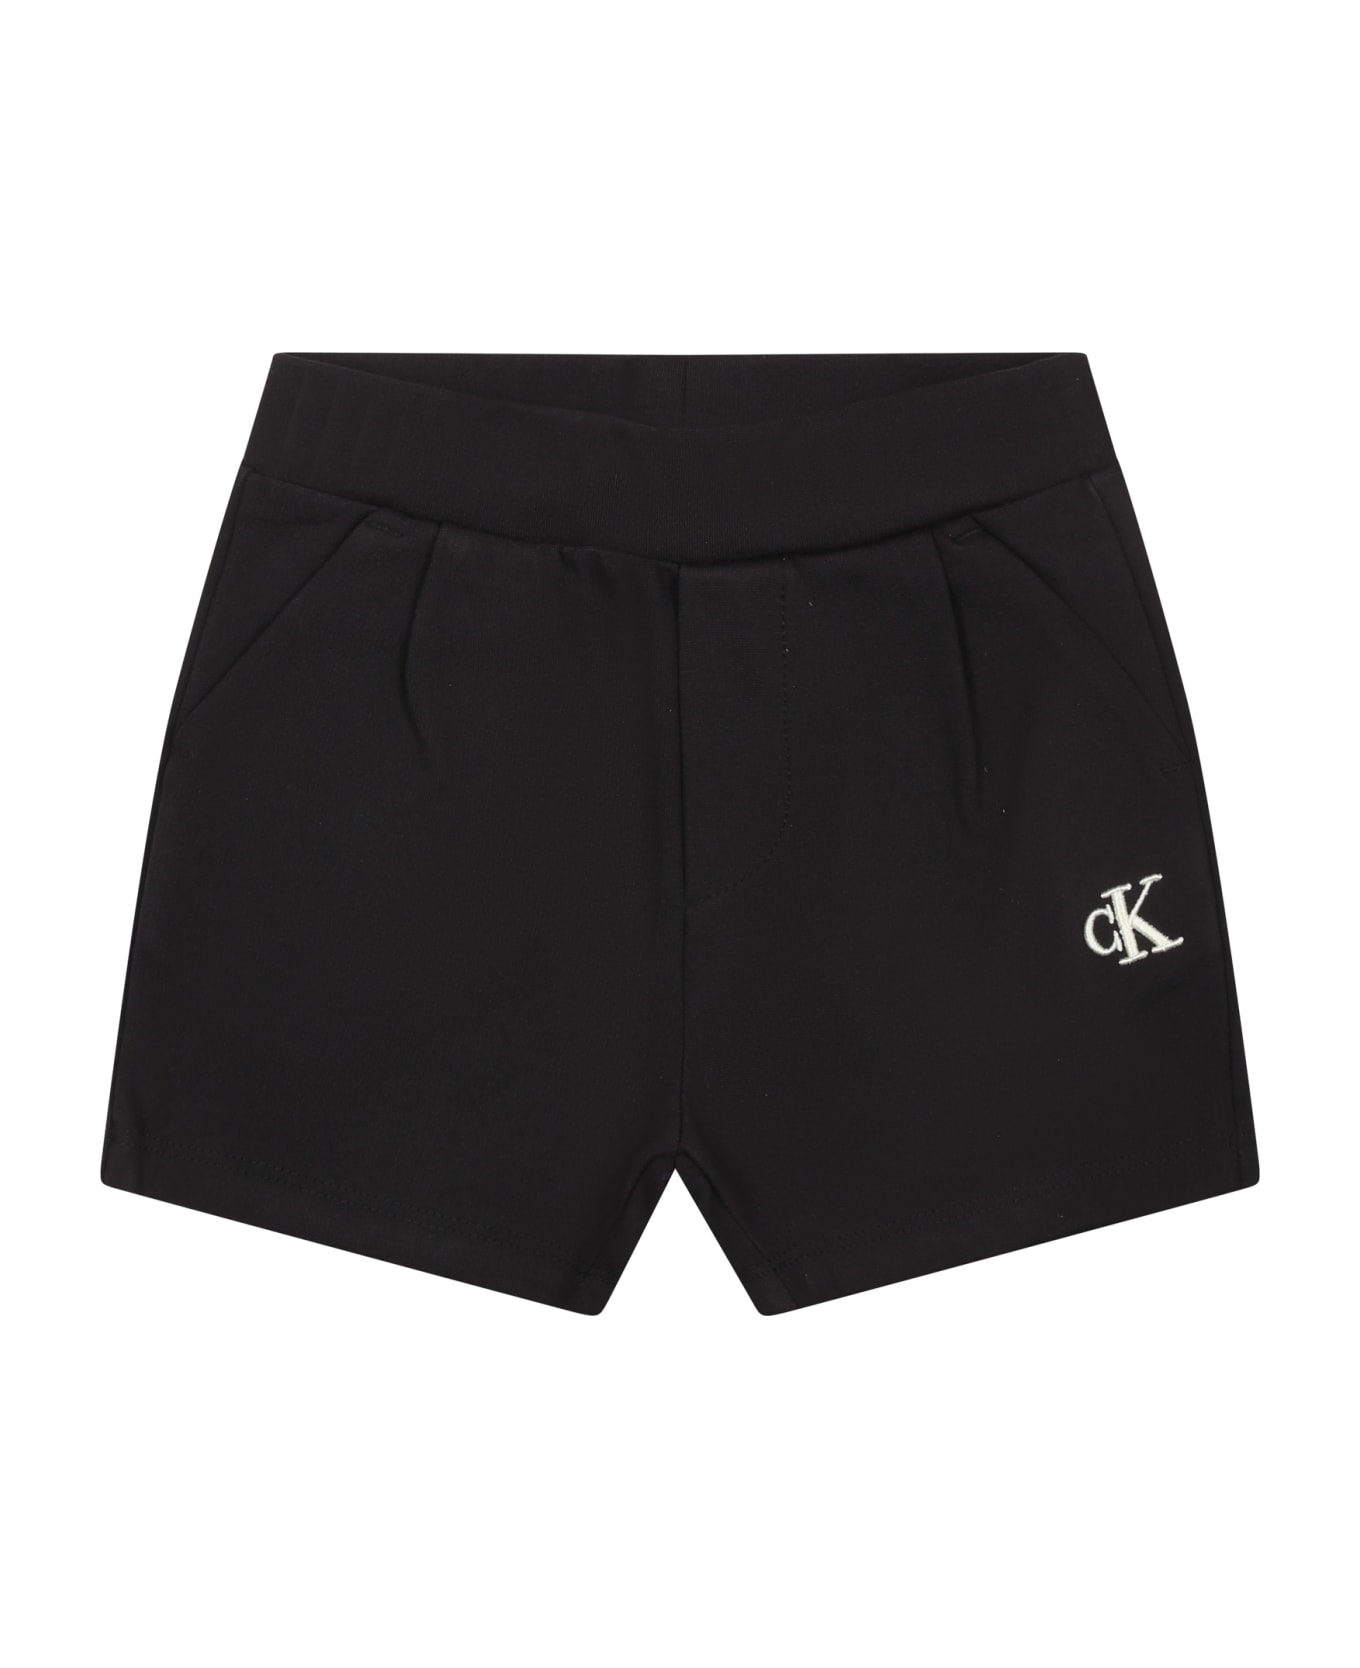 Calvin Klein Black Sports Shorts For Baby Boy With Logo - Black ボトムス